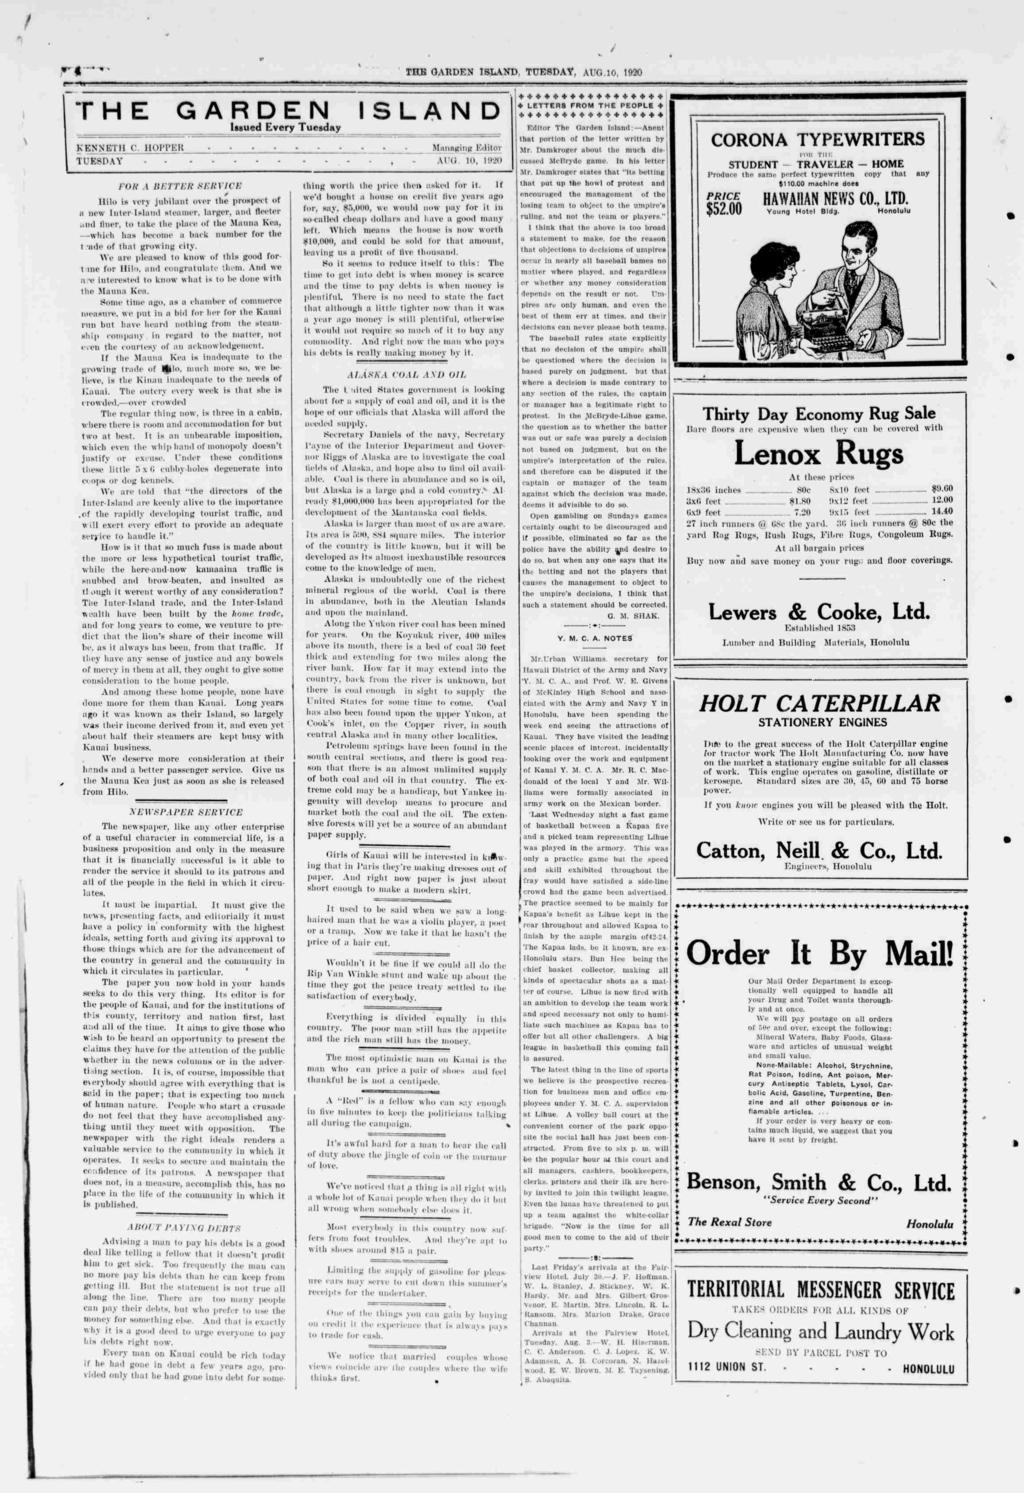 TUB GARDEN ISLAND, TUESDAY, AUG. 10, 1920 THE GARDEN ISLAND Issued Every Tuesday KENNETH C.